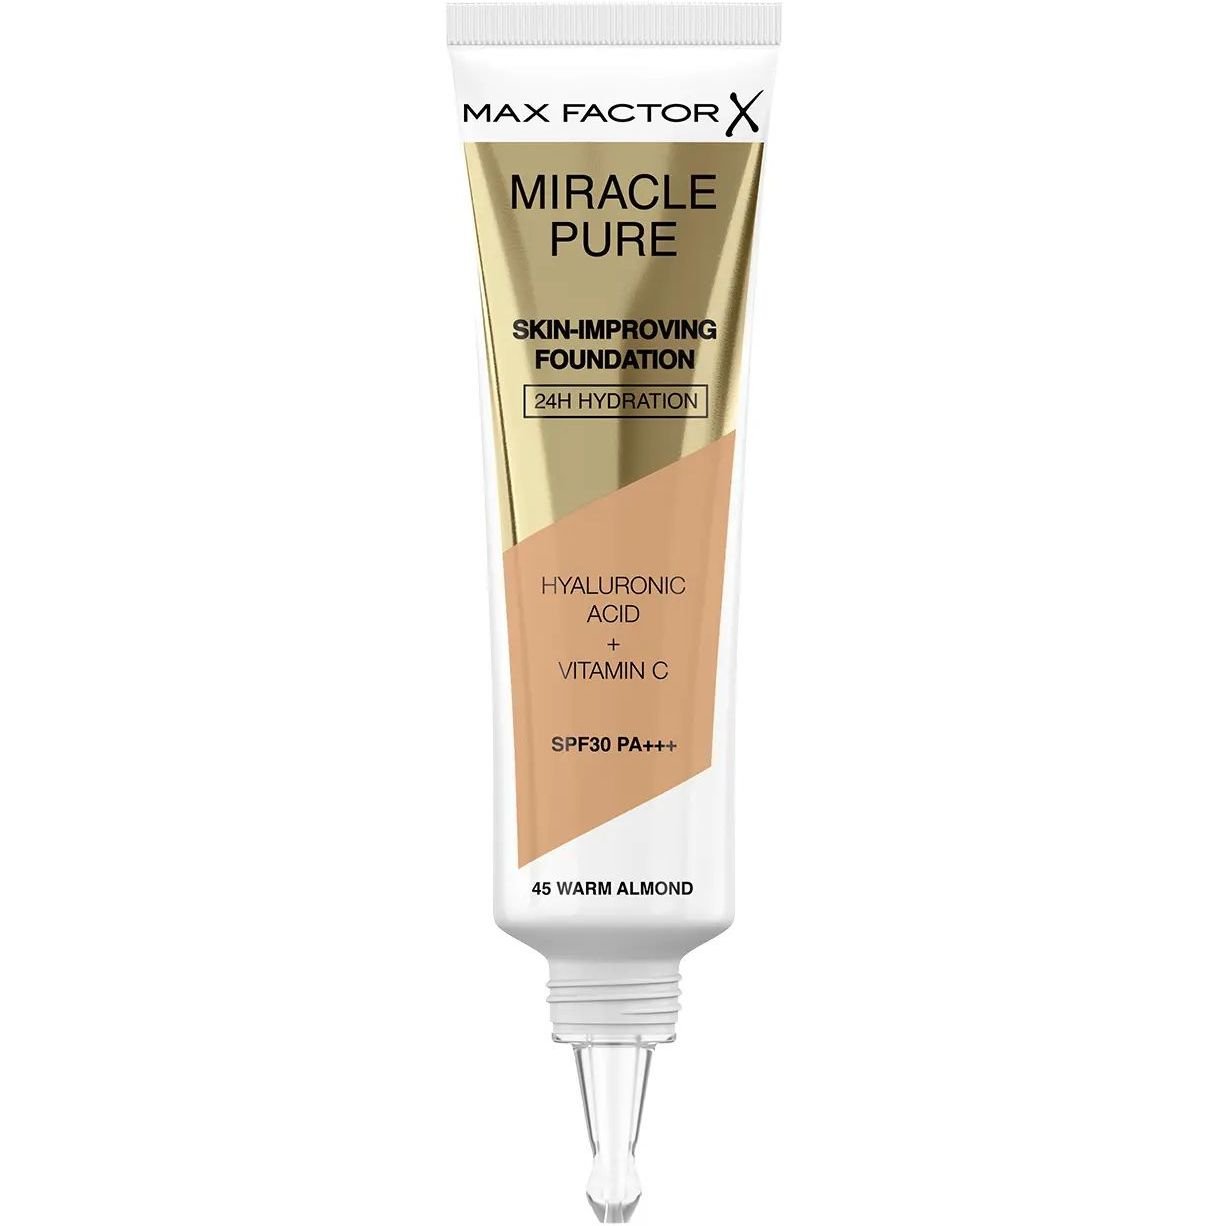 Тональная основа Max Factor Miracle Pure Skin-Improving Foundation SPF30 тон 045 (Warm Almond) 30 мл - фото 2